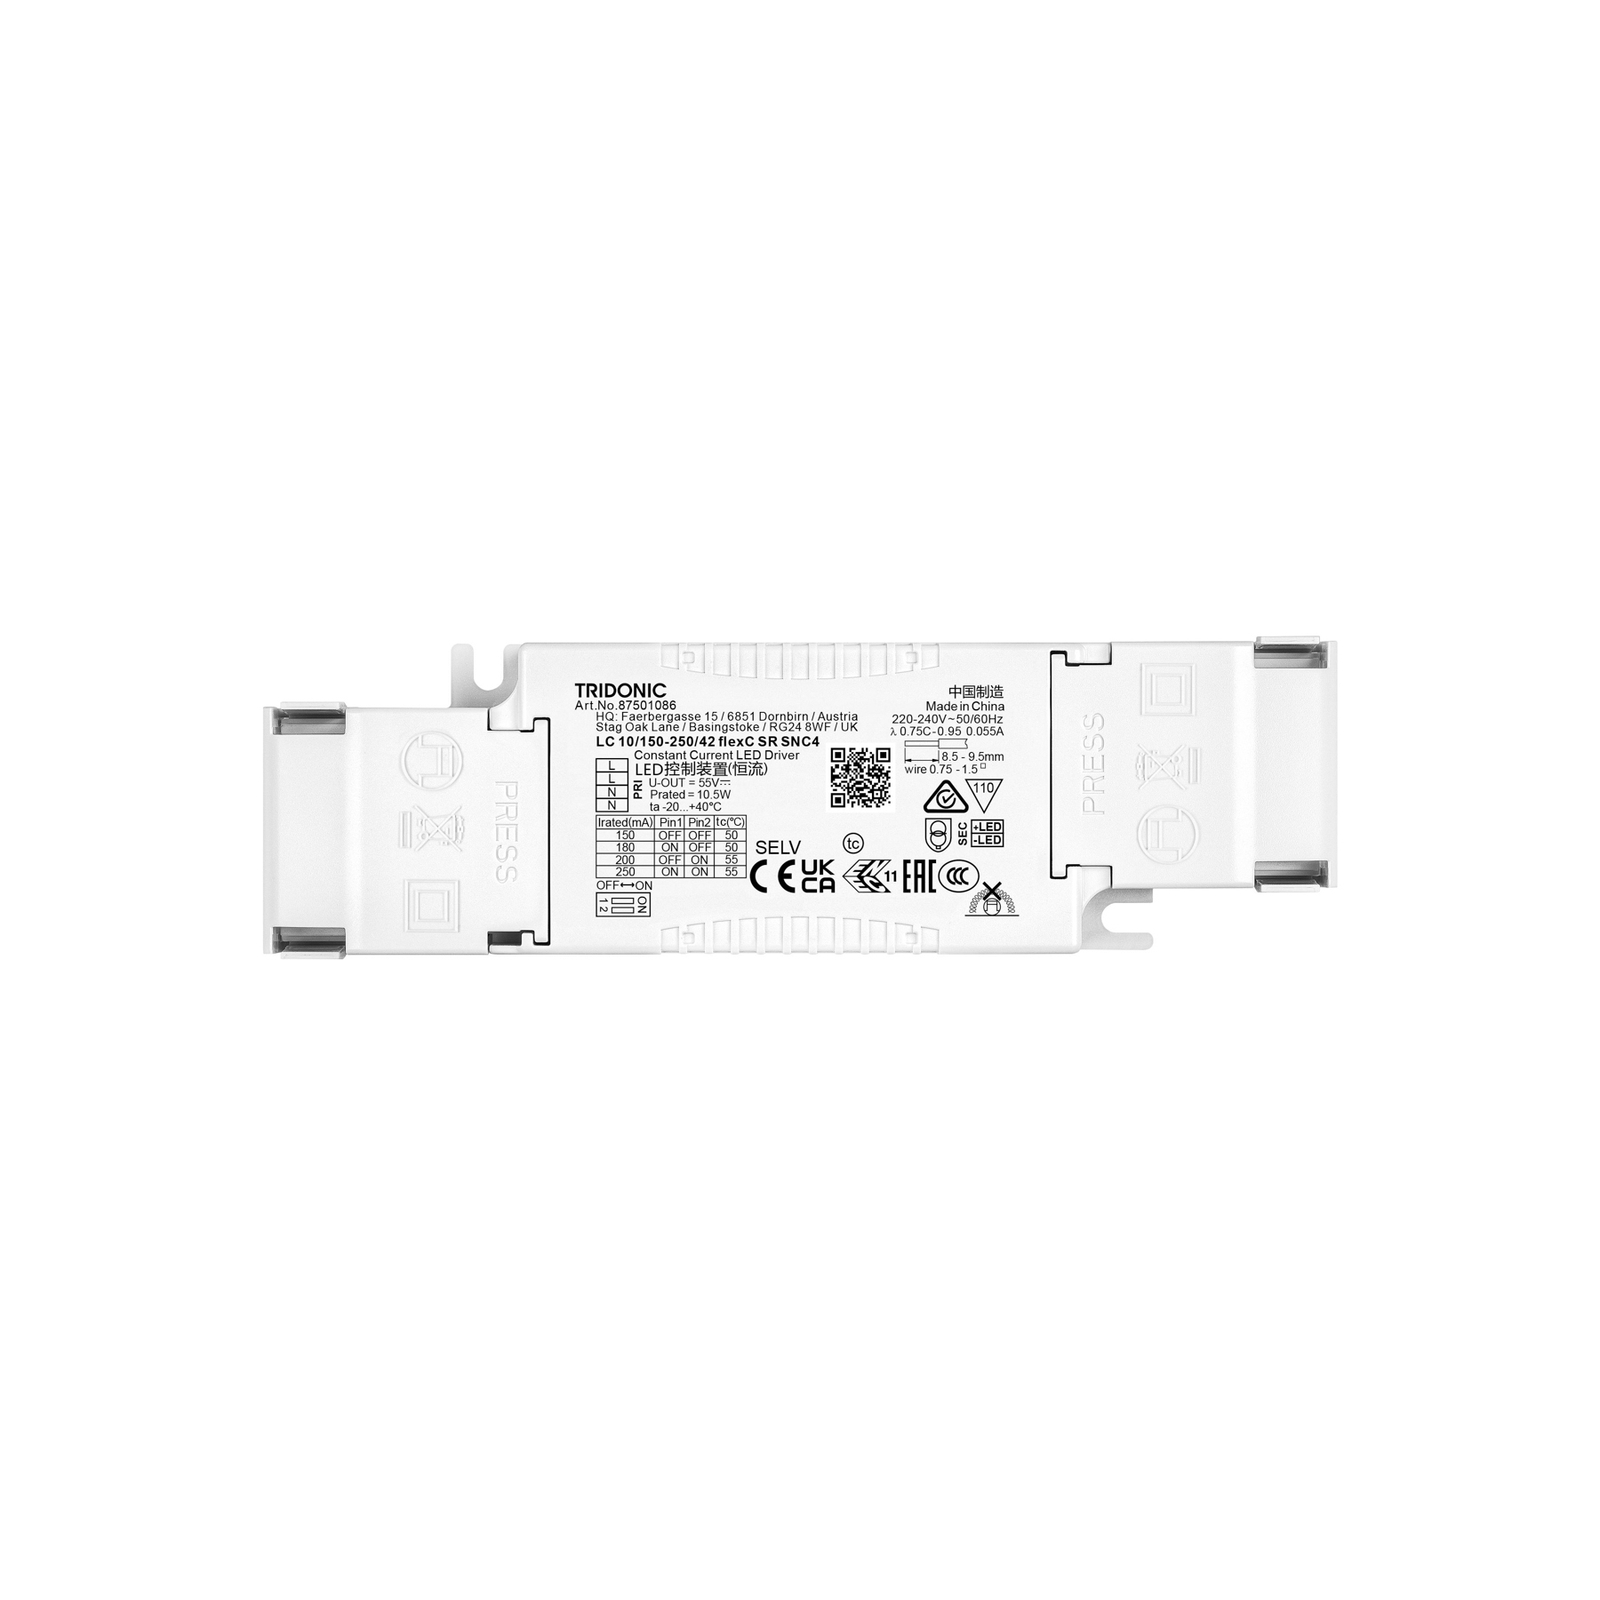 TRIDONIC LED driver compacto LC 10/150-250/42 flexC SR SNC4